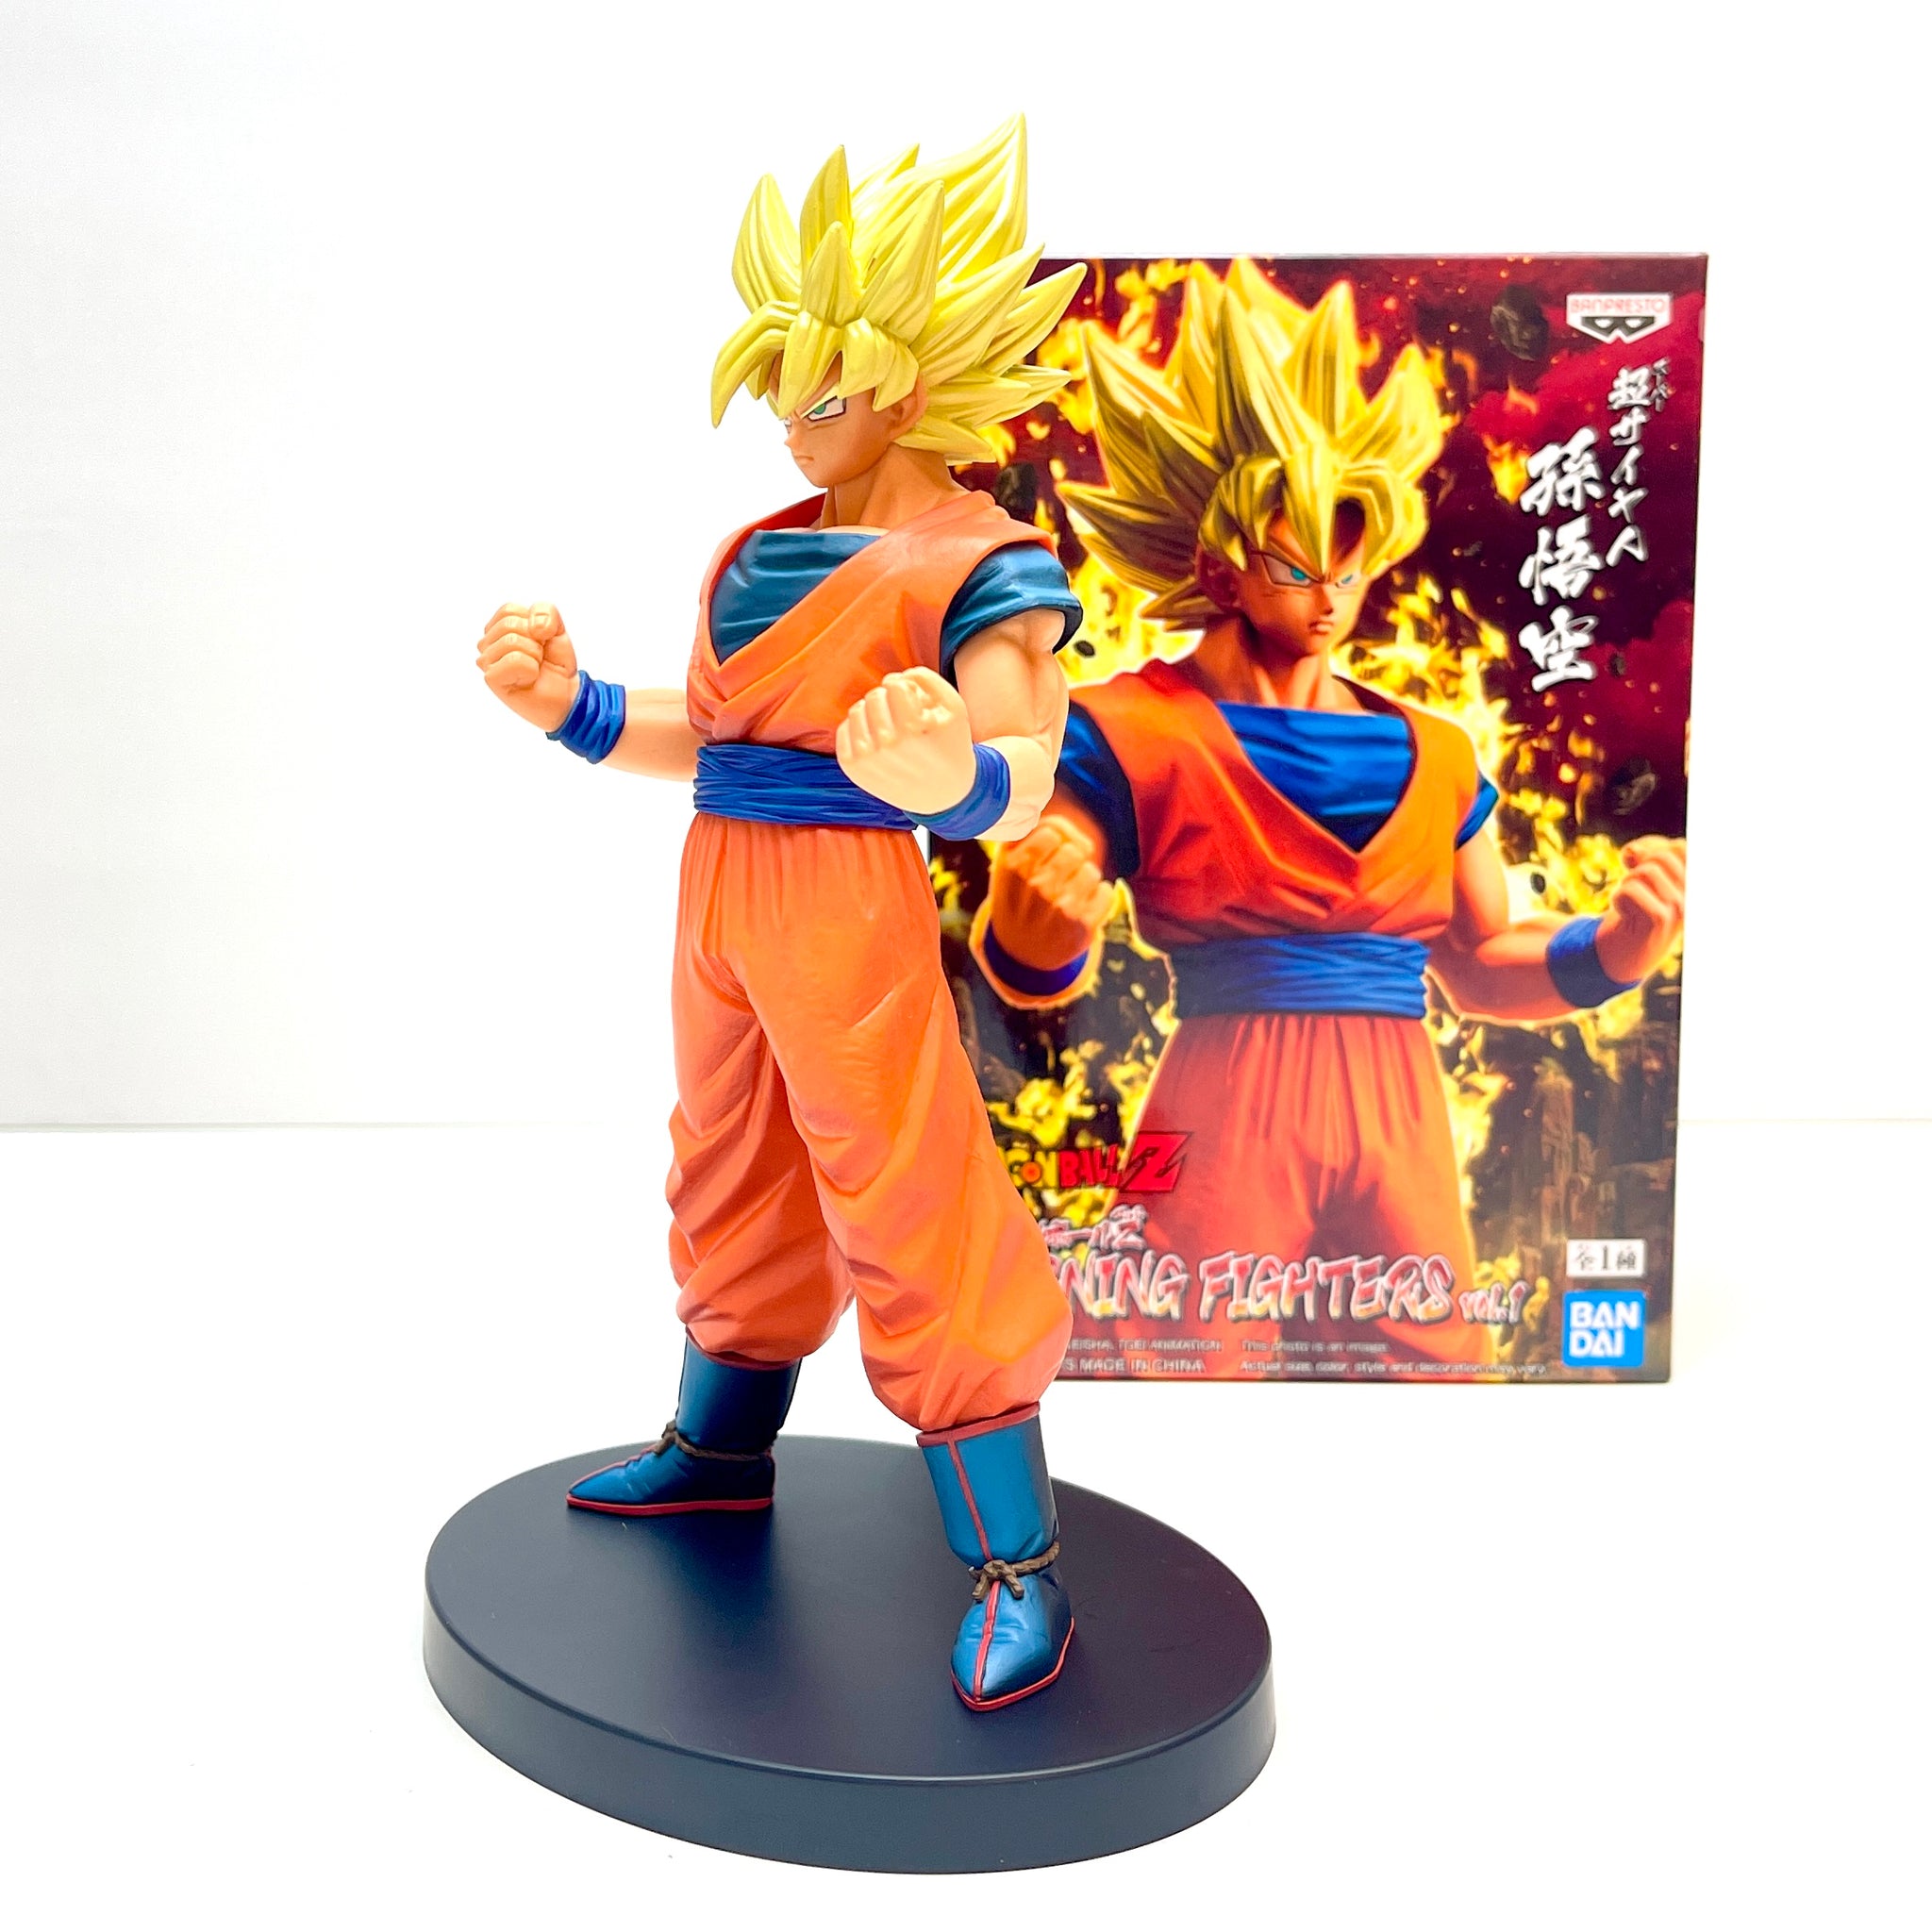 Banpresto Dragon Ball Z Solid Edge Works Vol.1 Son Goku Figure orange